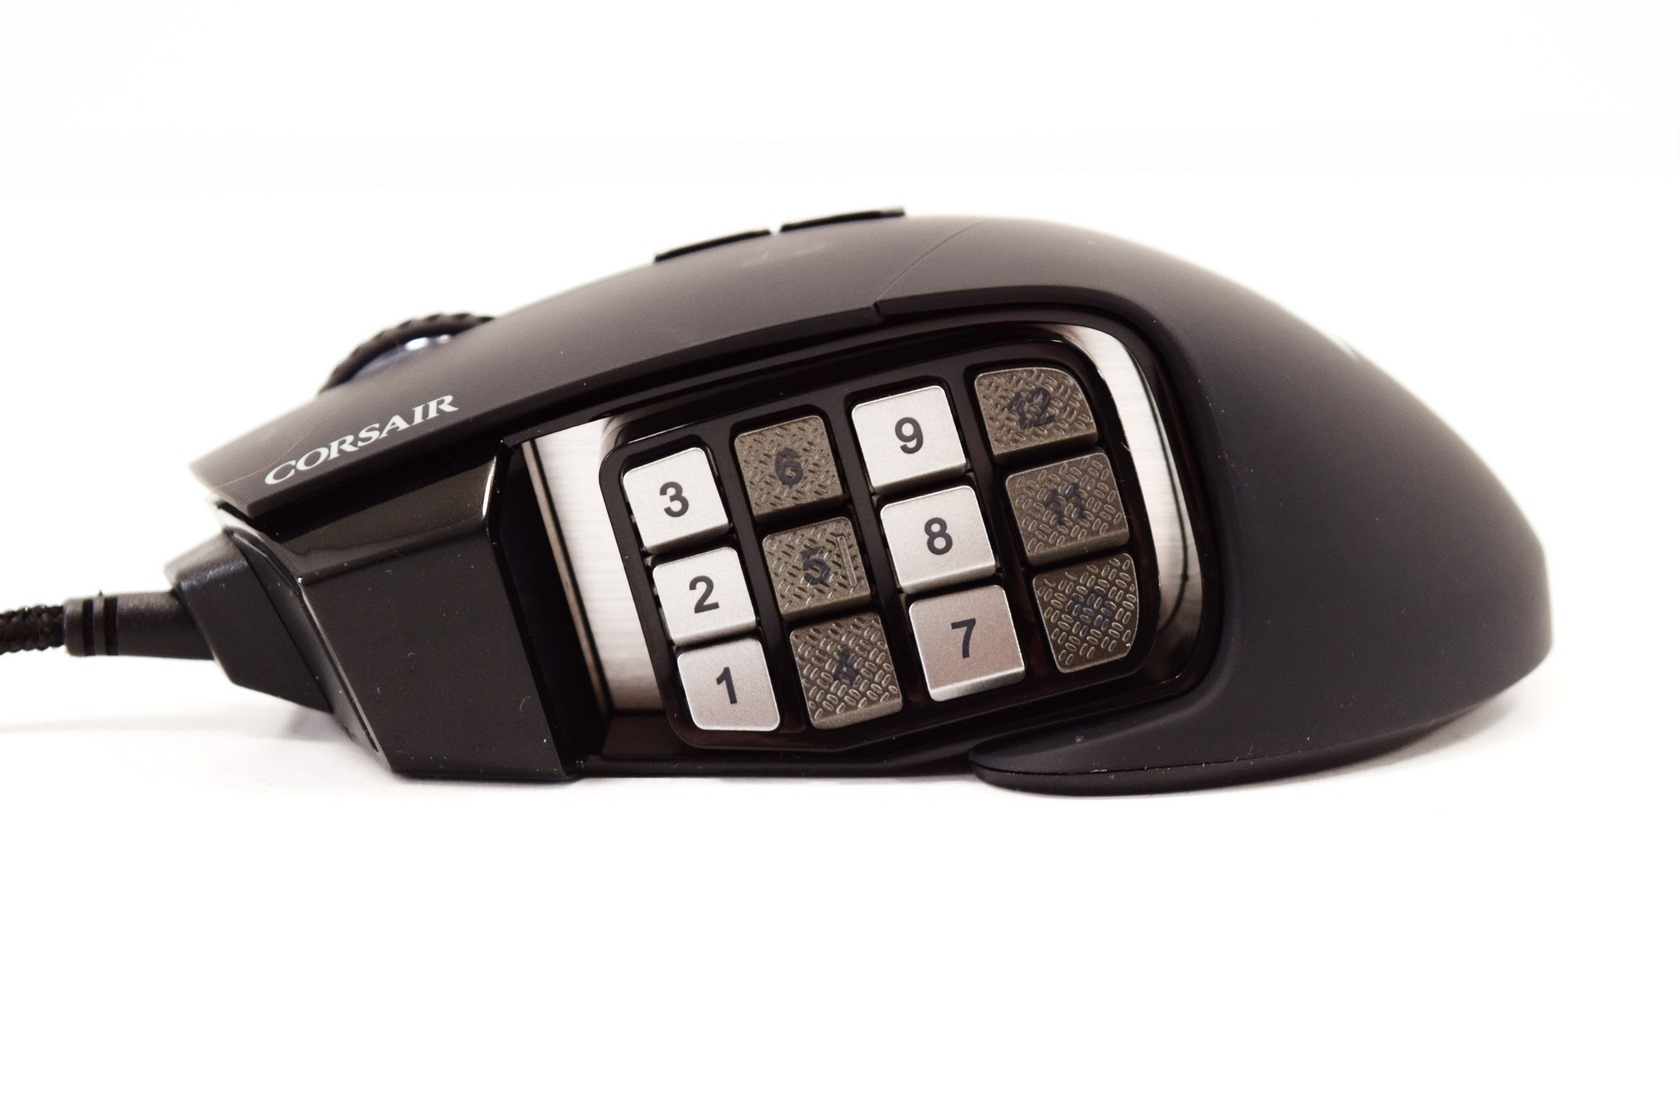 Corsair Scimitar Elite Wireless review: MMO mouse has a sliding